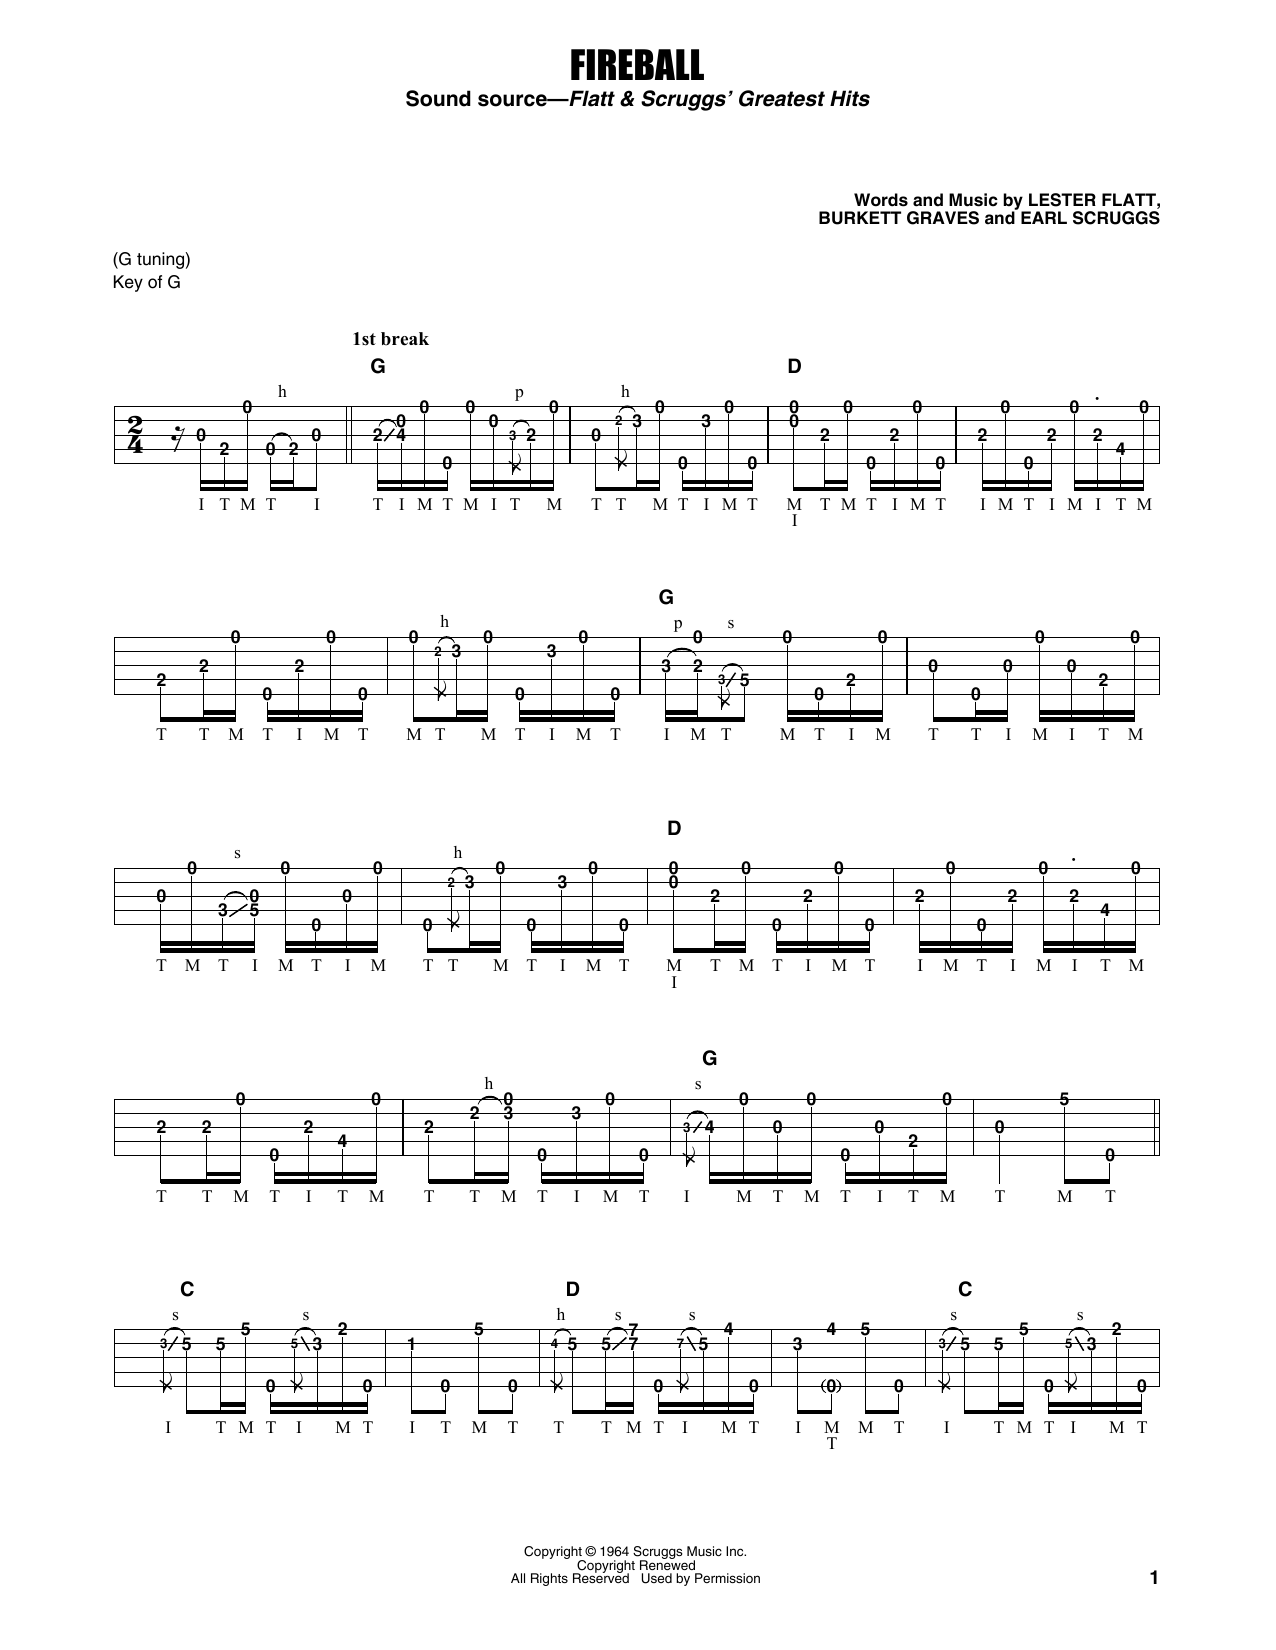 Earl Scruggs Fireball Sheet Music Notes & Chords for Banjo Tab - Download or Print PDF